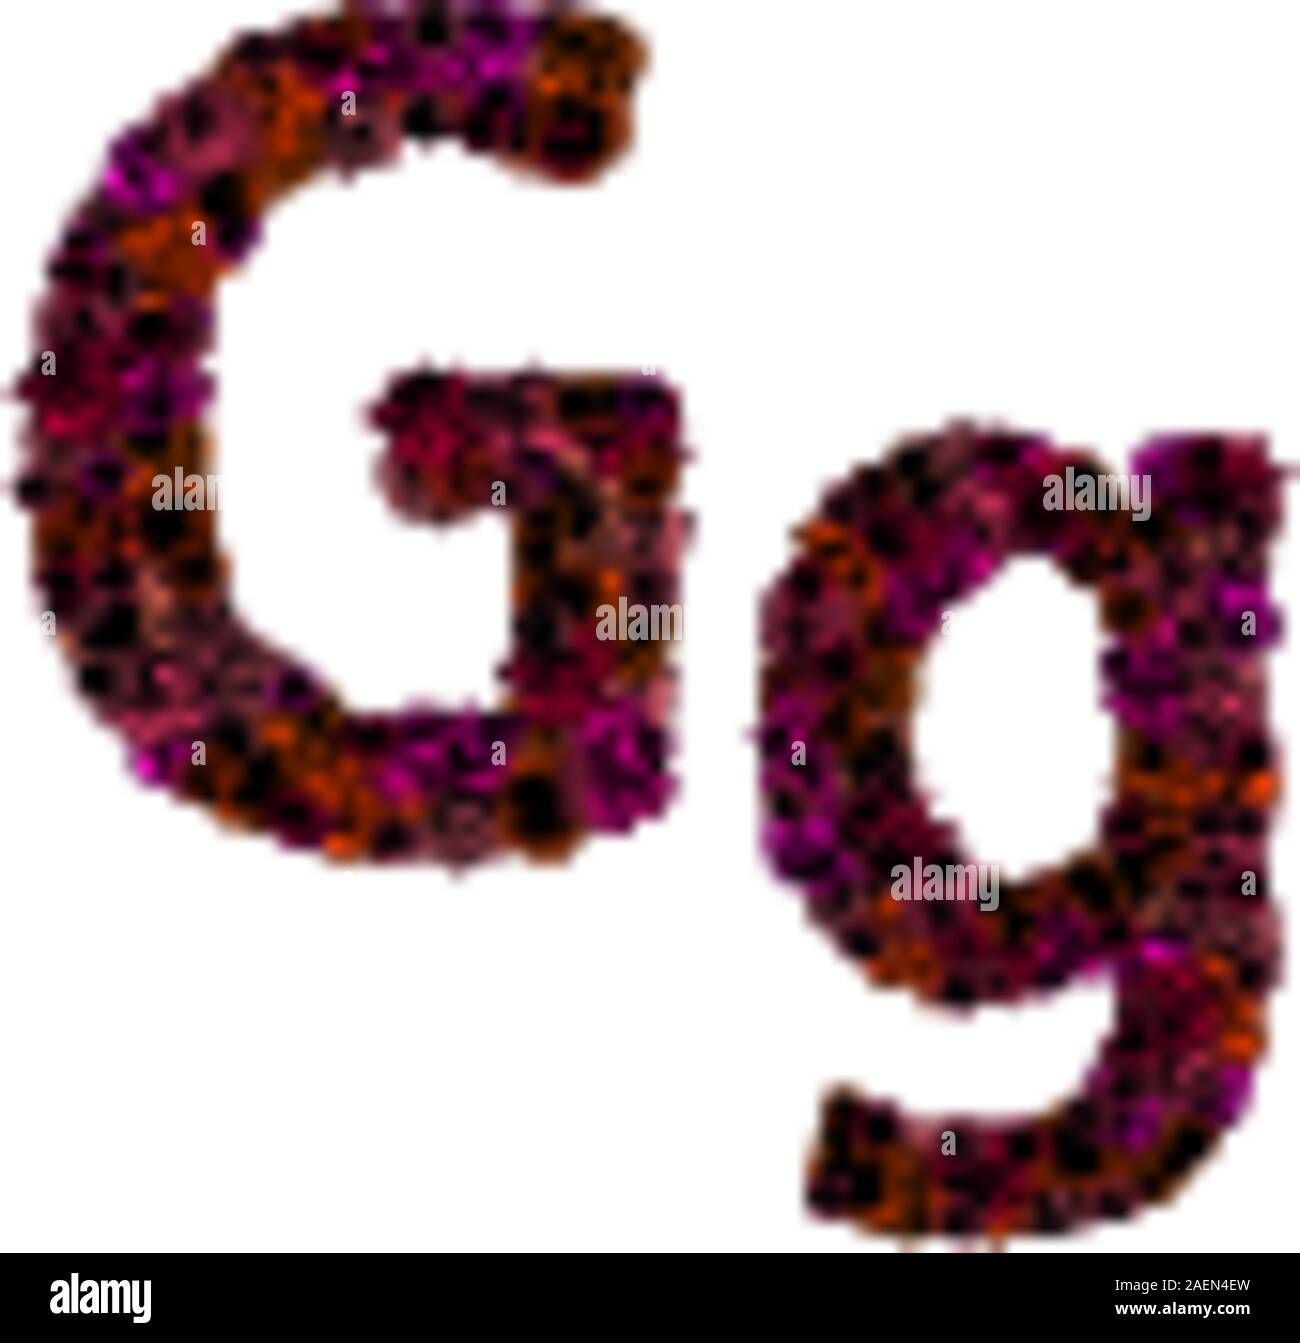 G logo, Letter G monogram. Style - floral, (2291985)